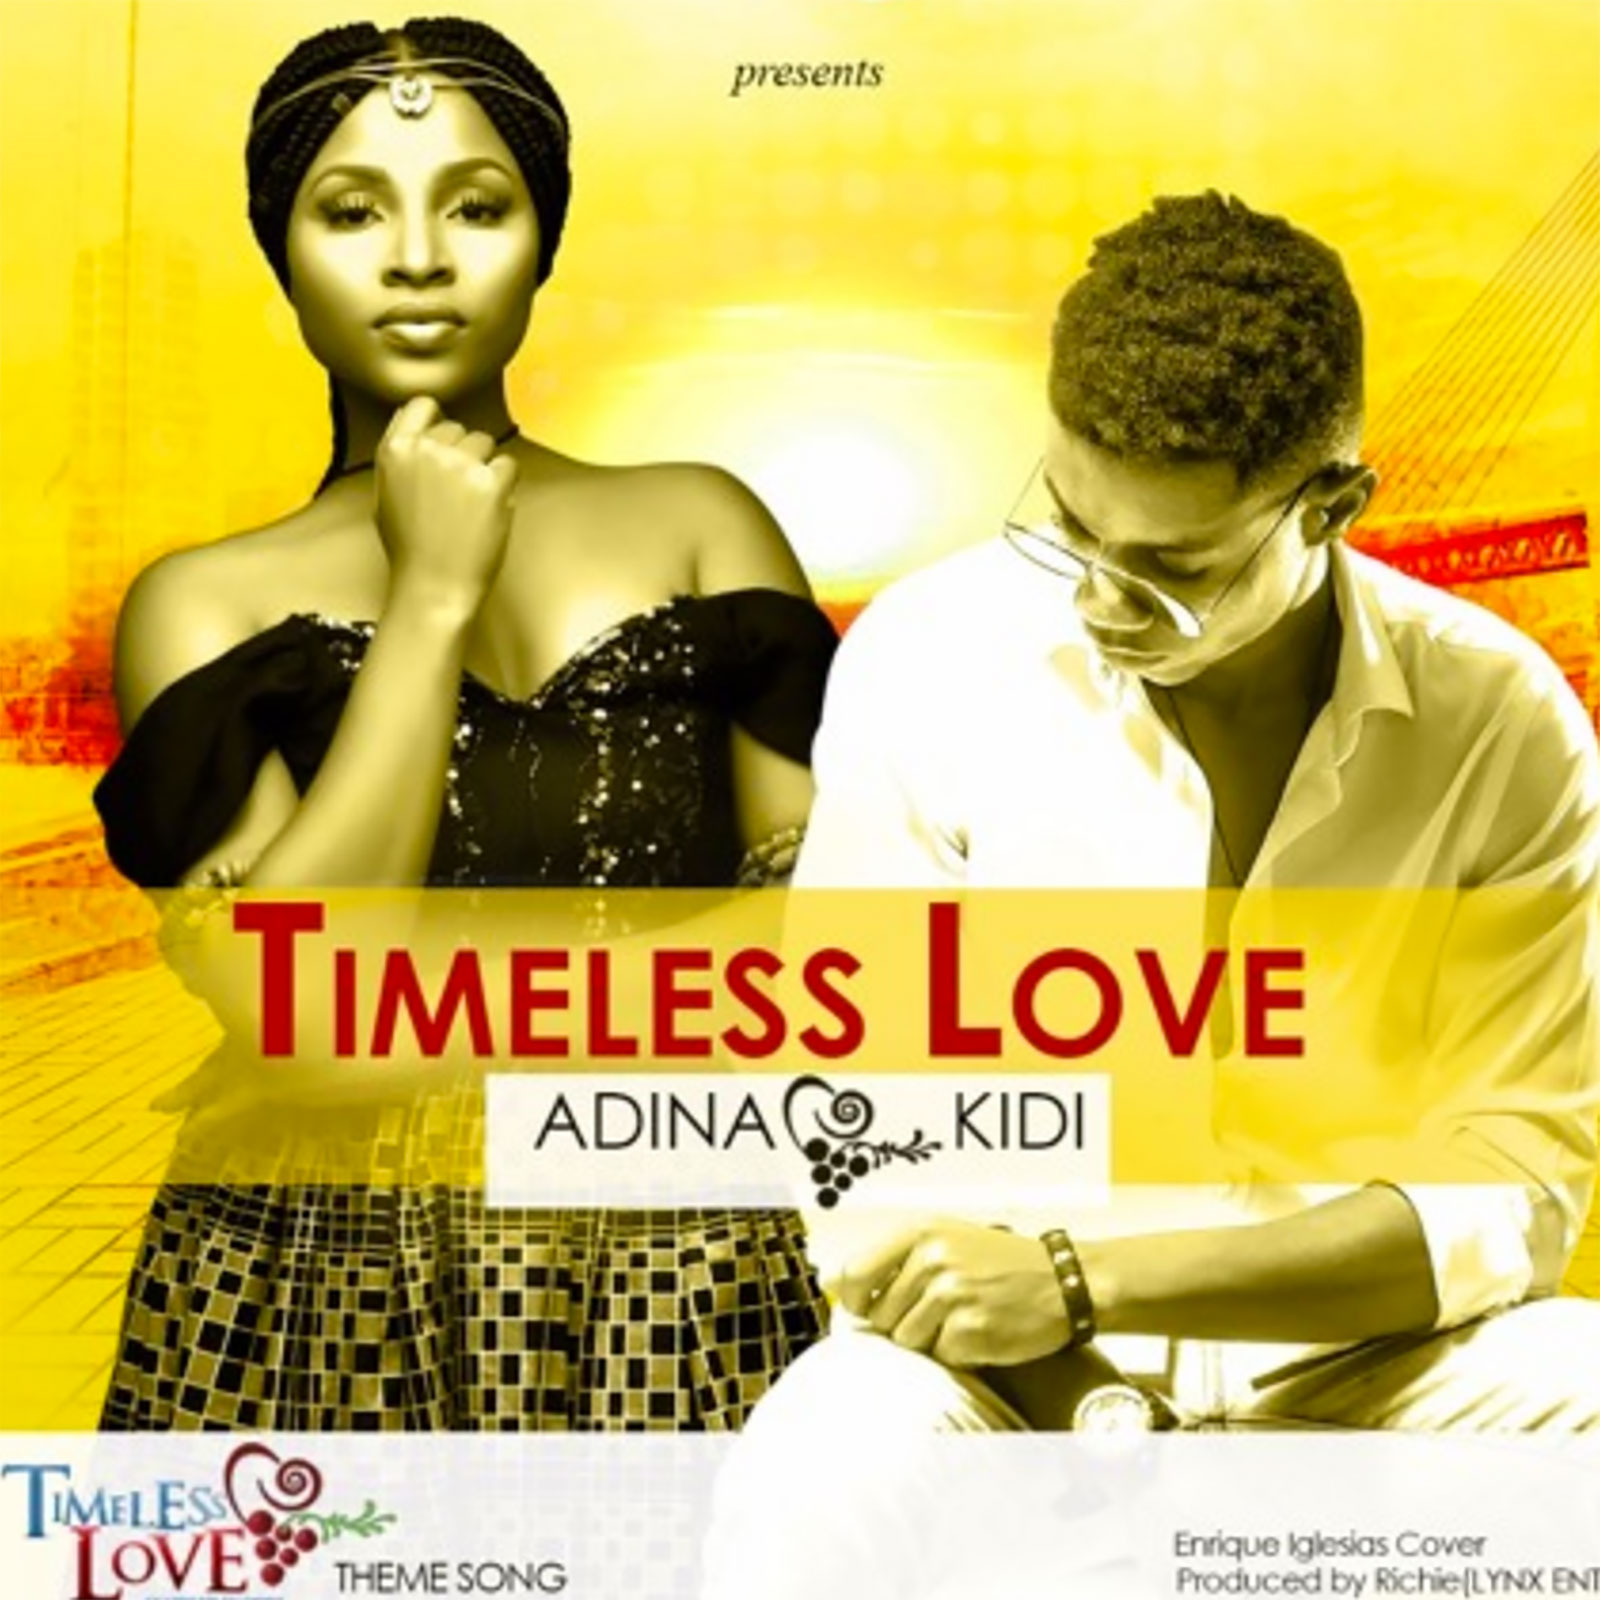 Timeless Love by Adina feat. KiDi